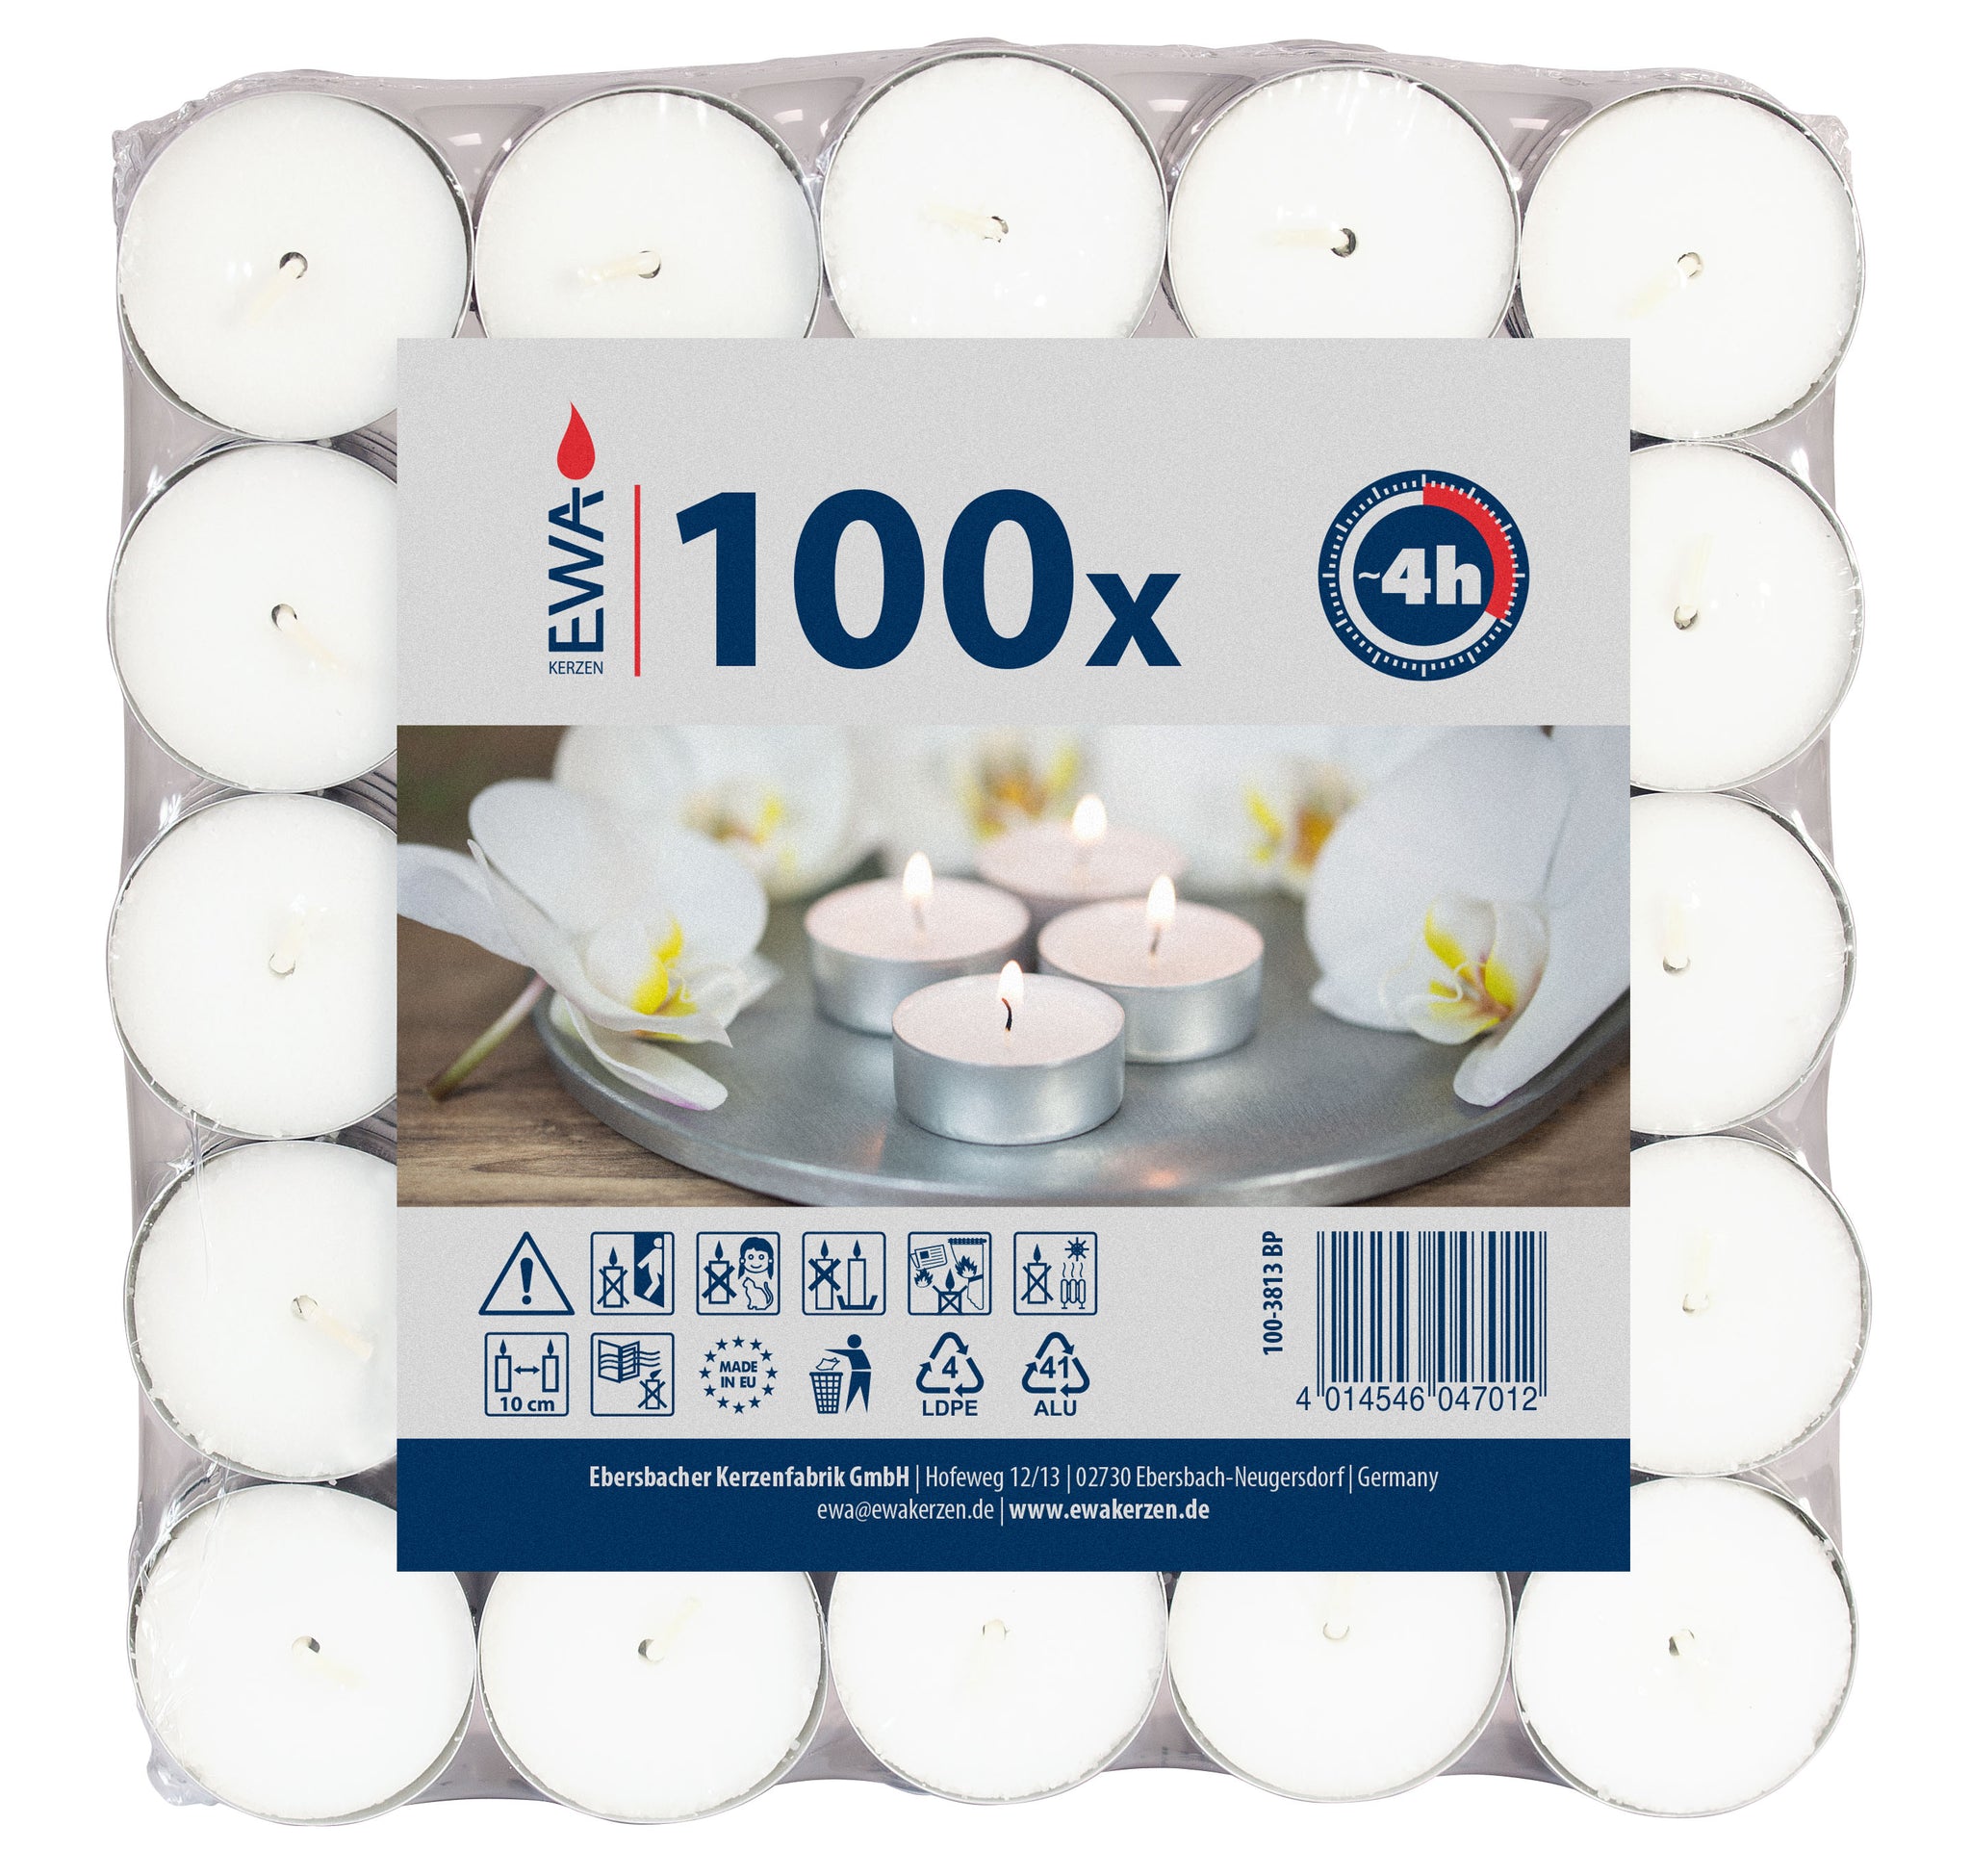 Tea lights pack of 100